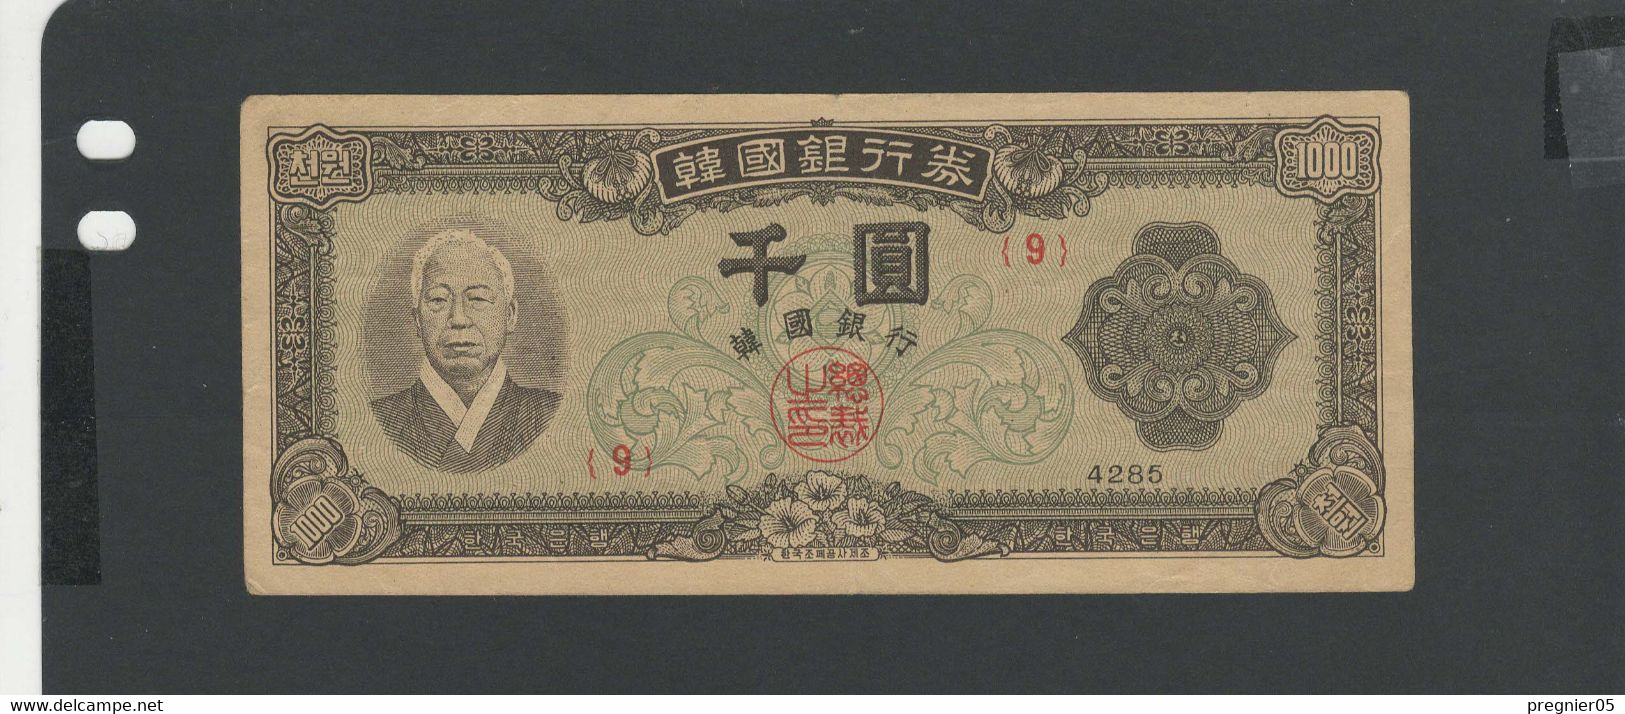 COREE Du SUD - Billet 1000 Won 1952 TTB+/VF+ Pick.010a - Corea Del Sud